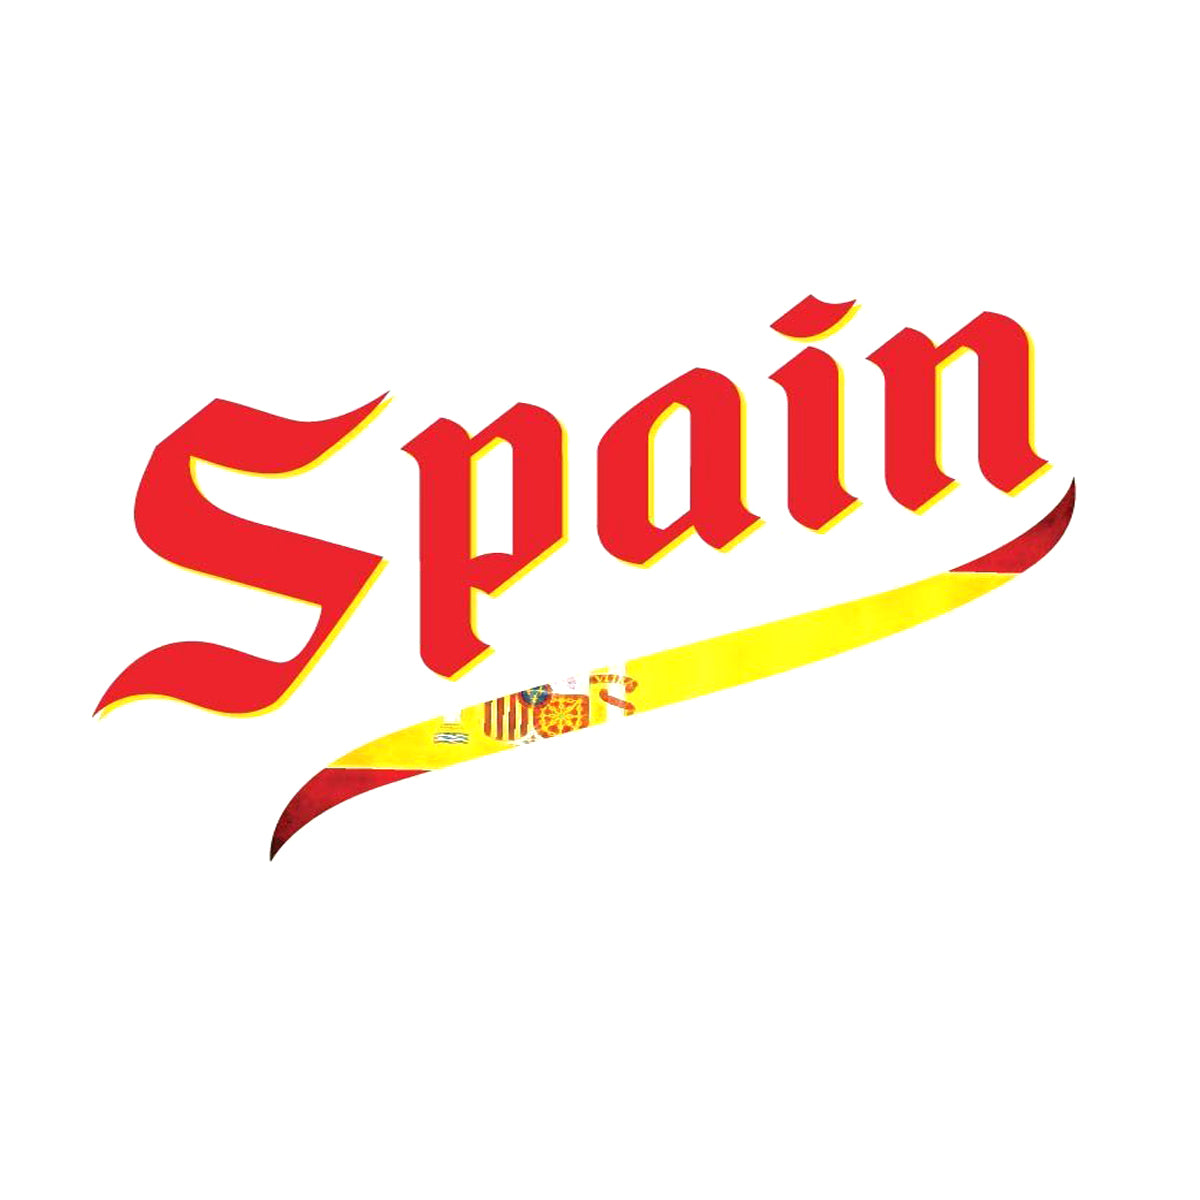 Spain Script World Cup 2022 Printed Tee T-shirts 411 